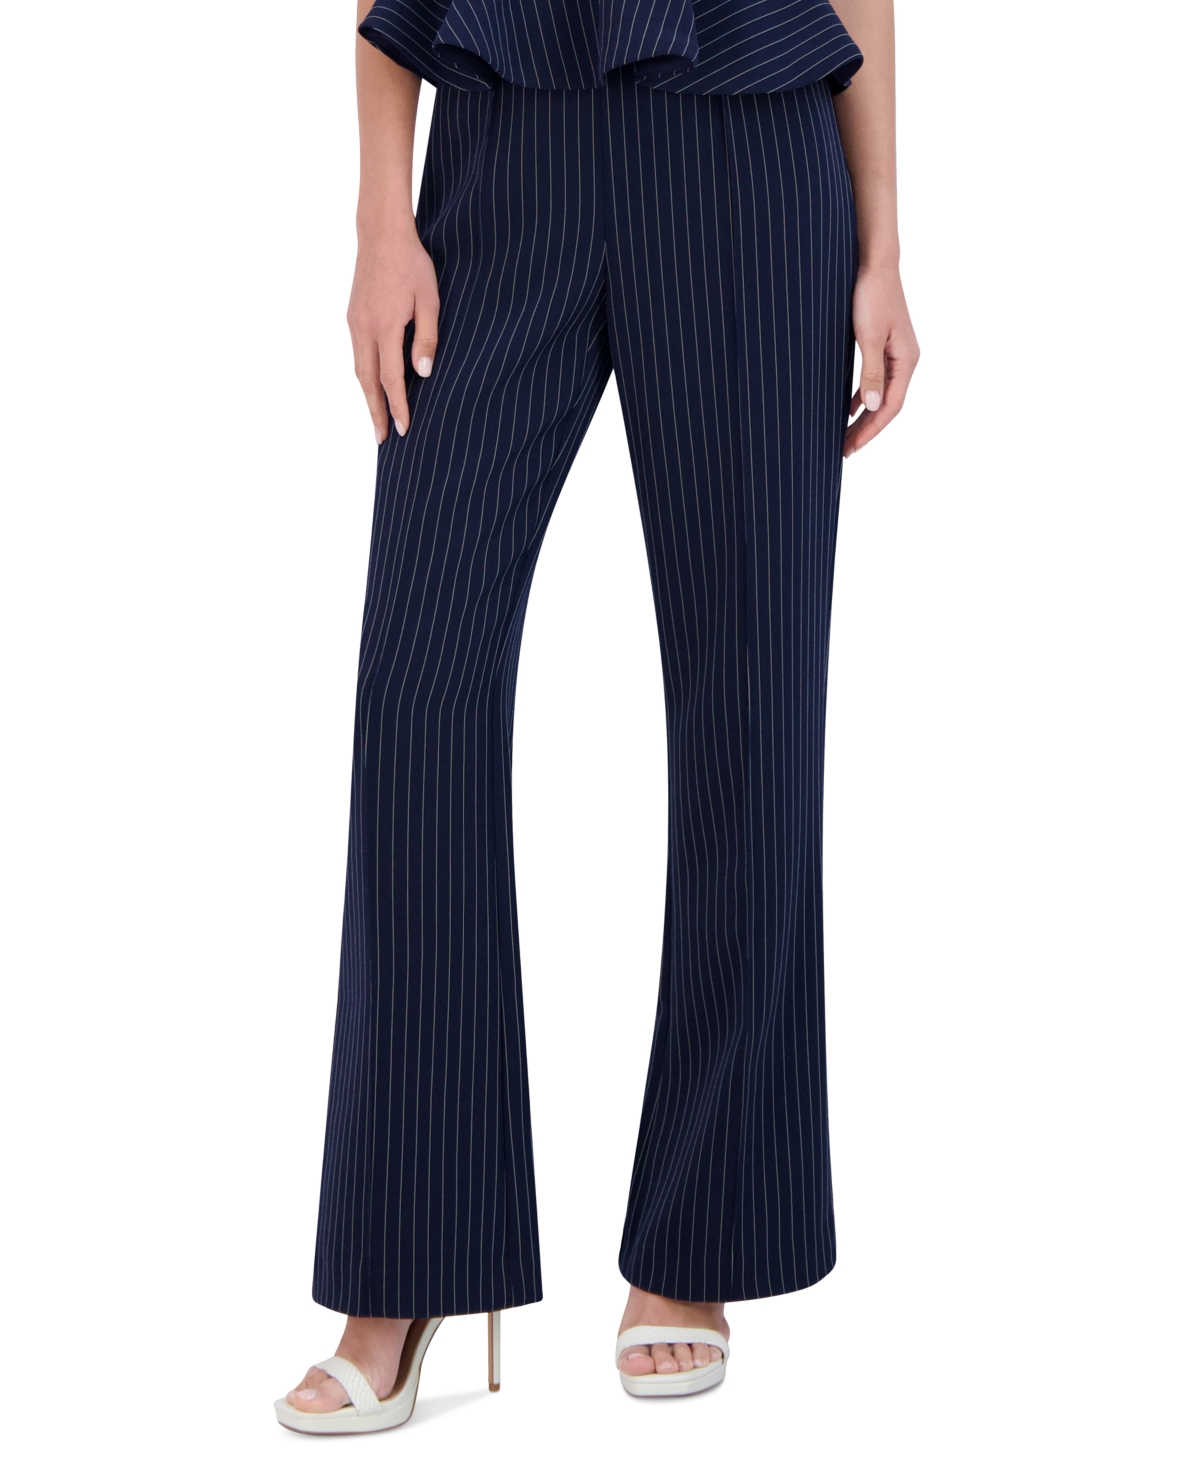 Shop Bcbg New York Women's Pinstripe Trousers